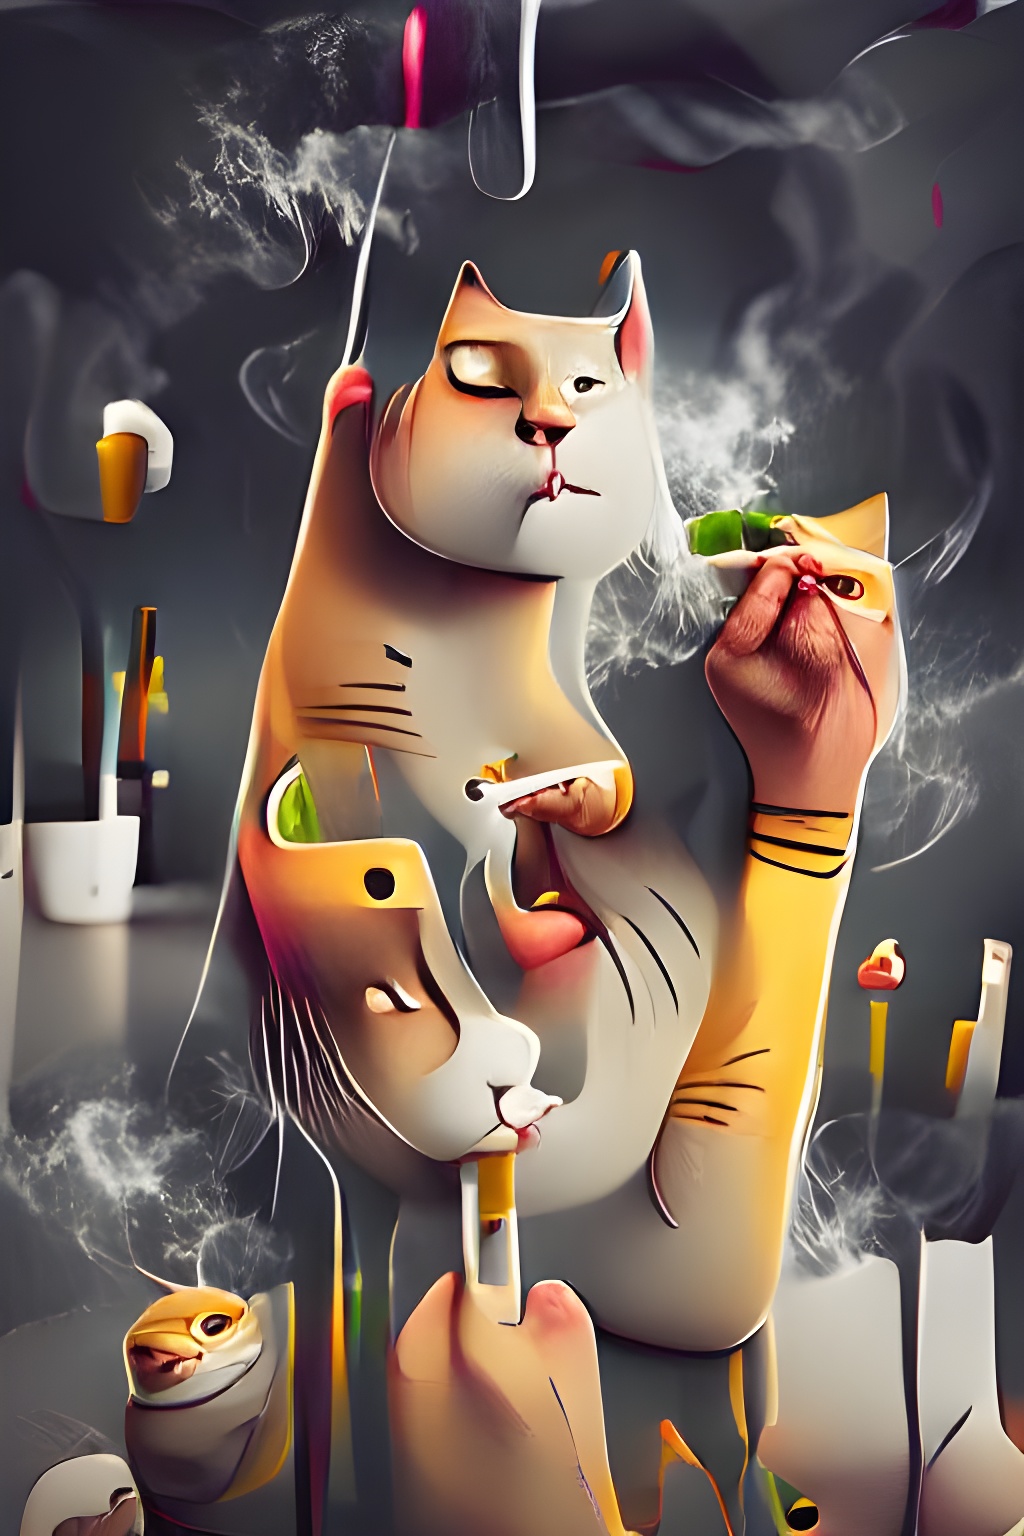 Smoking through nine lives